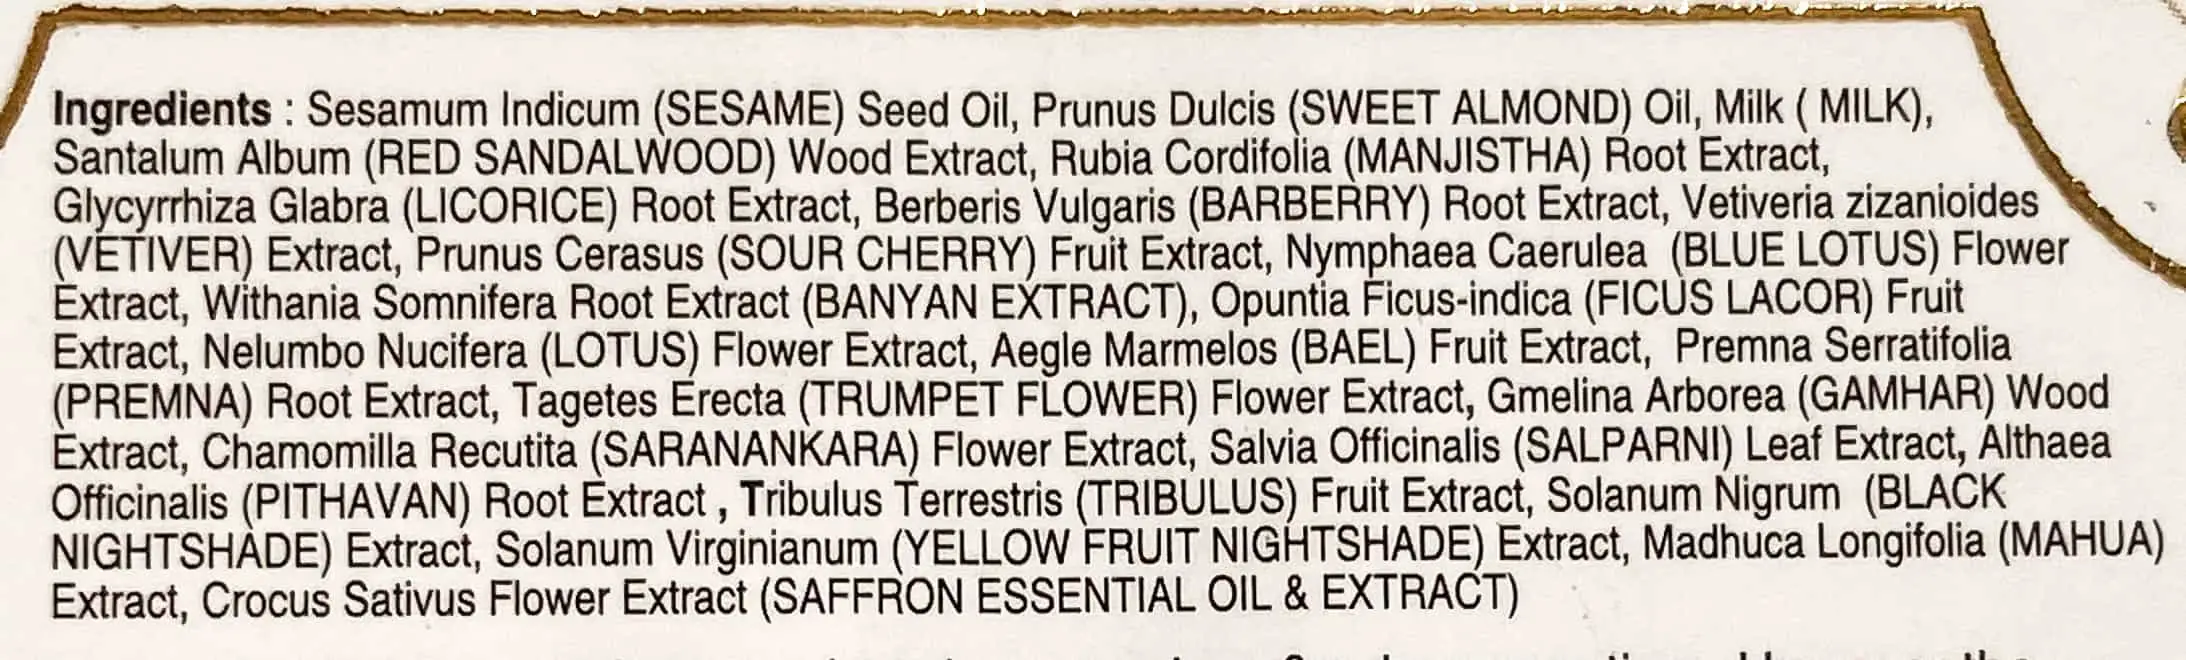 soulflower kumkumadi oil ingredients